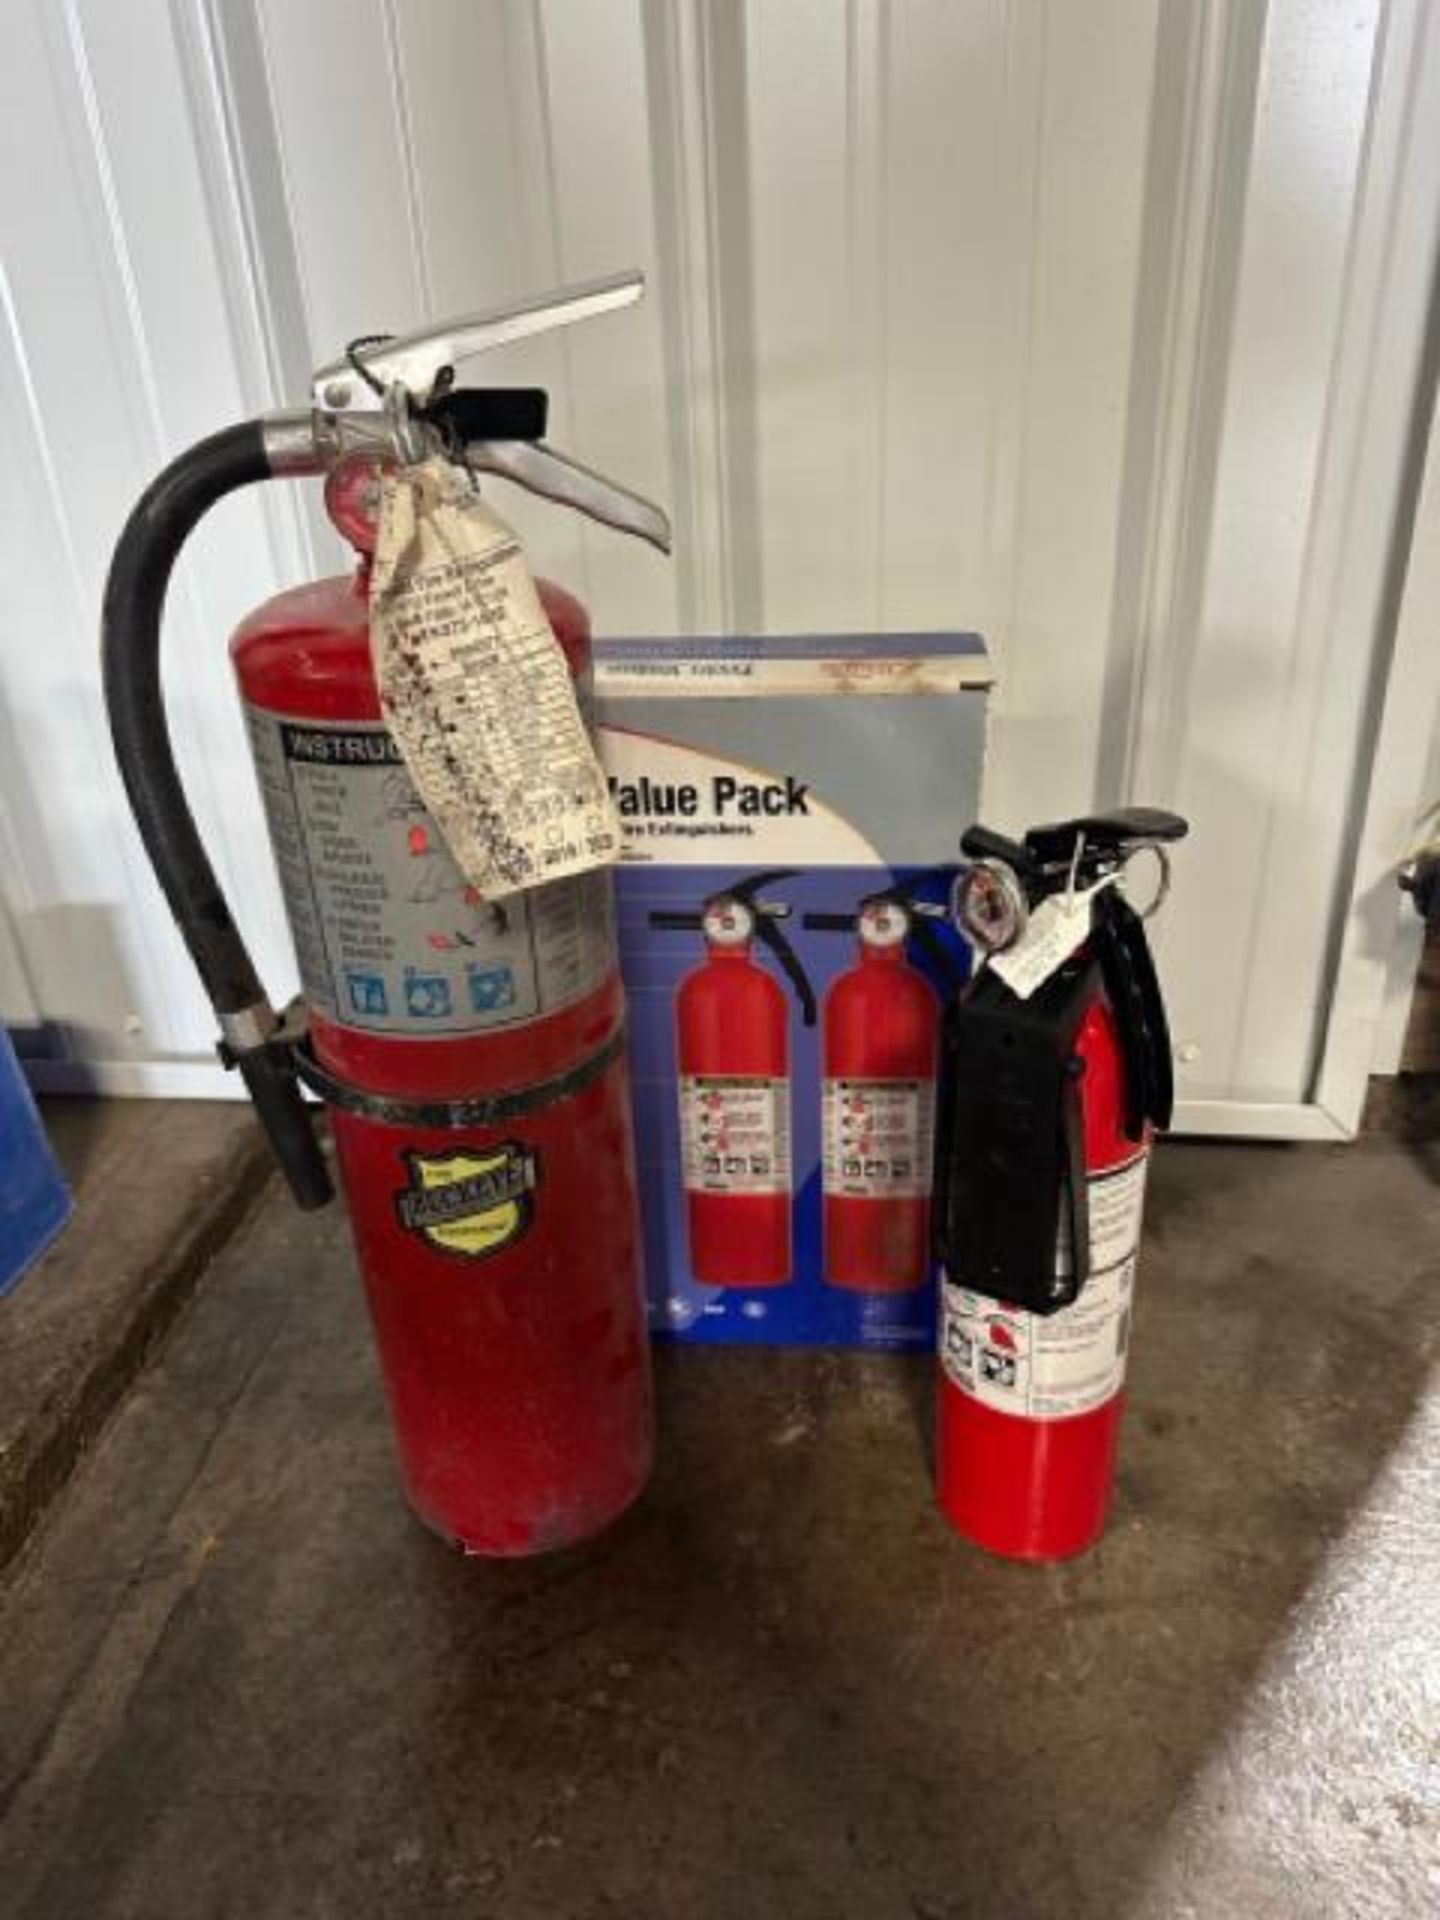 (4) Fire extinguishers